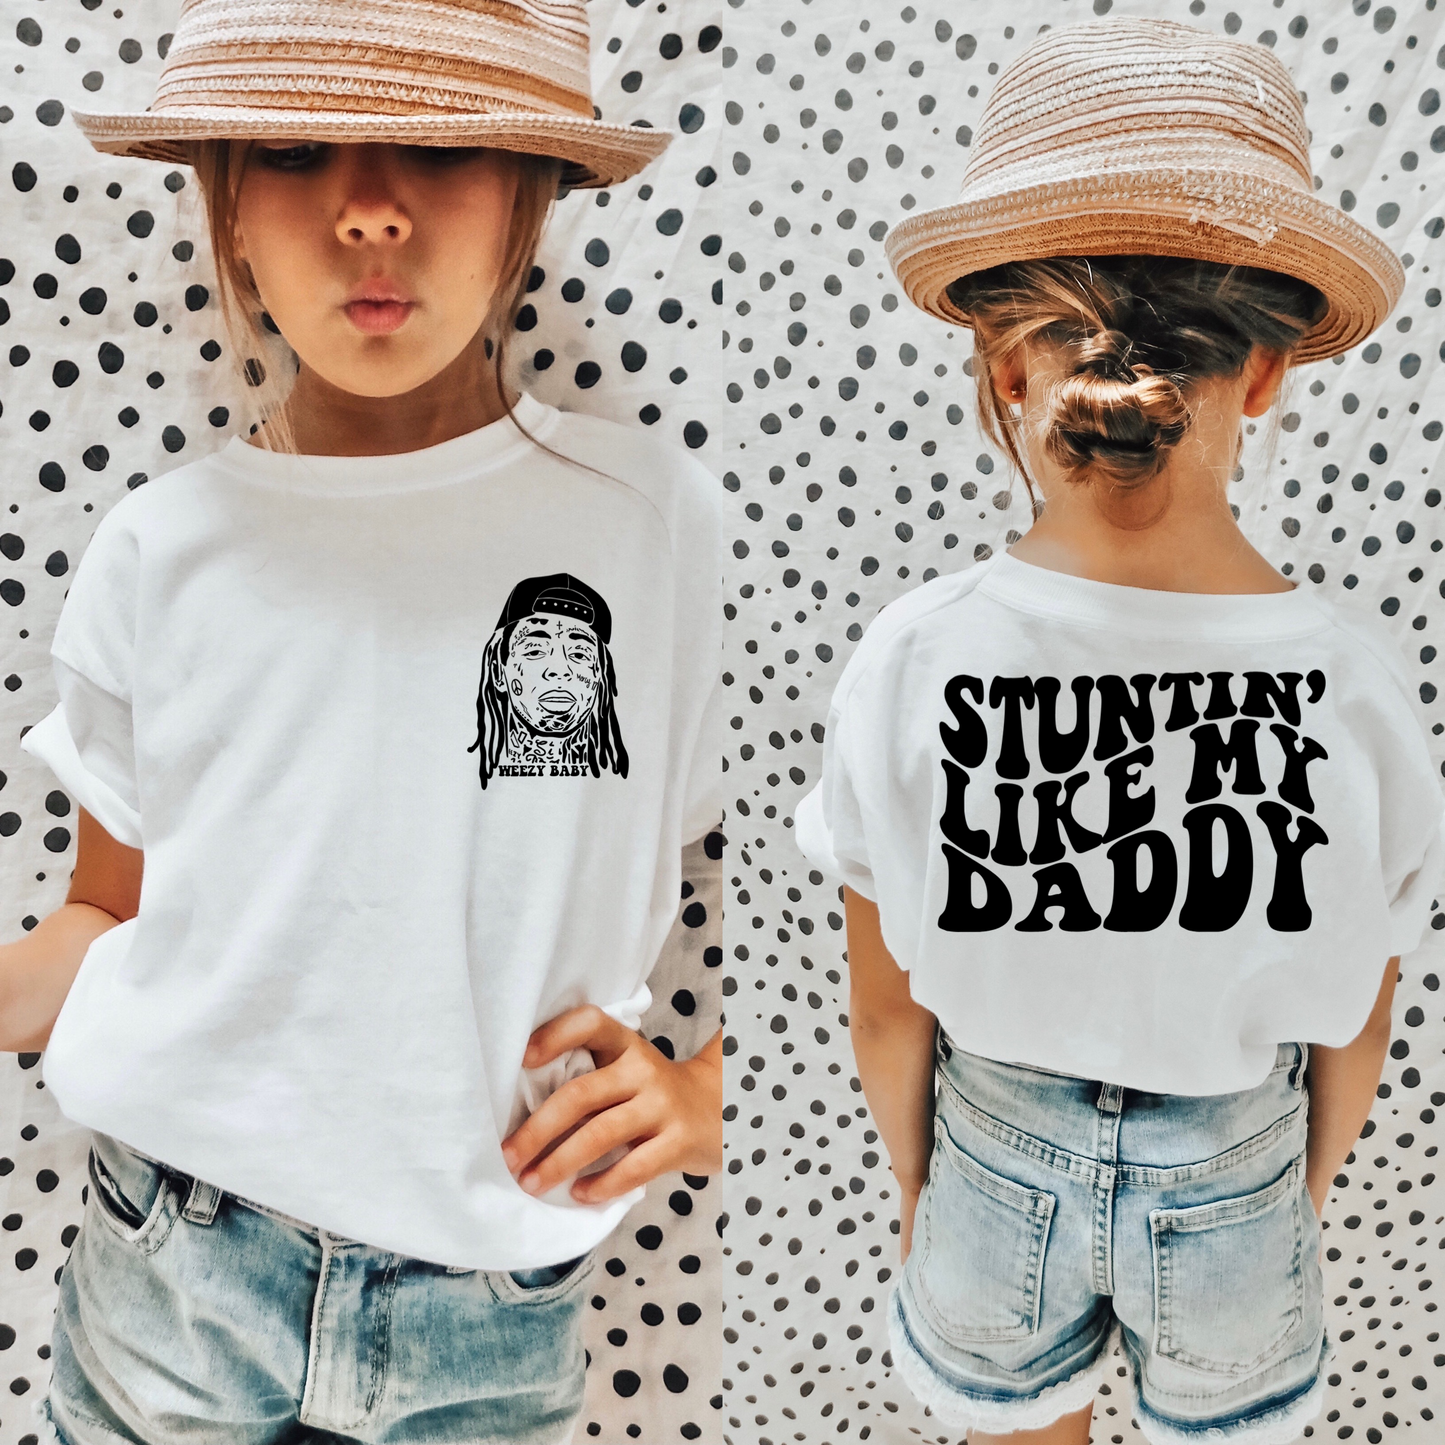 Stunnin’ Like My Daddy Youth